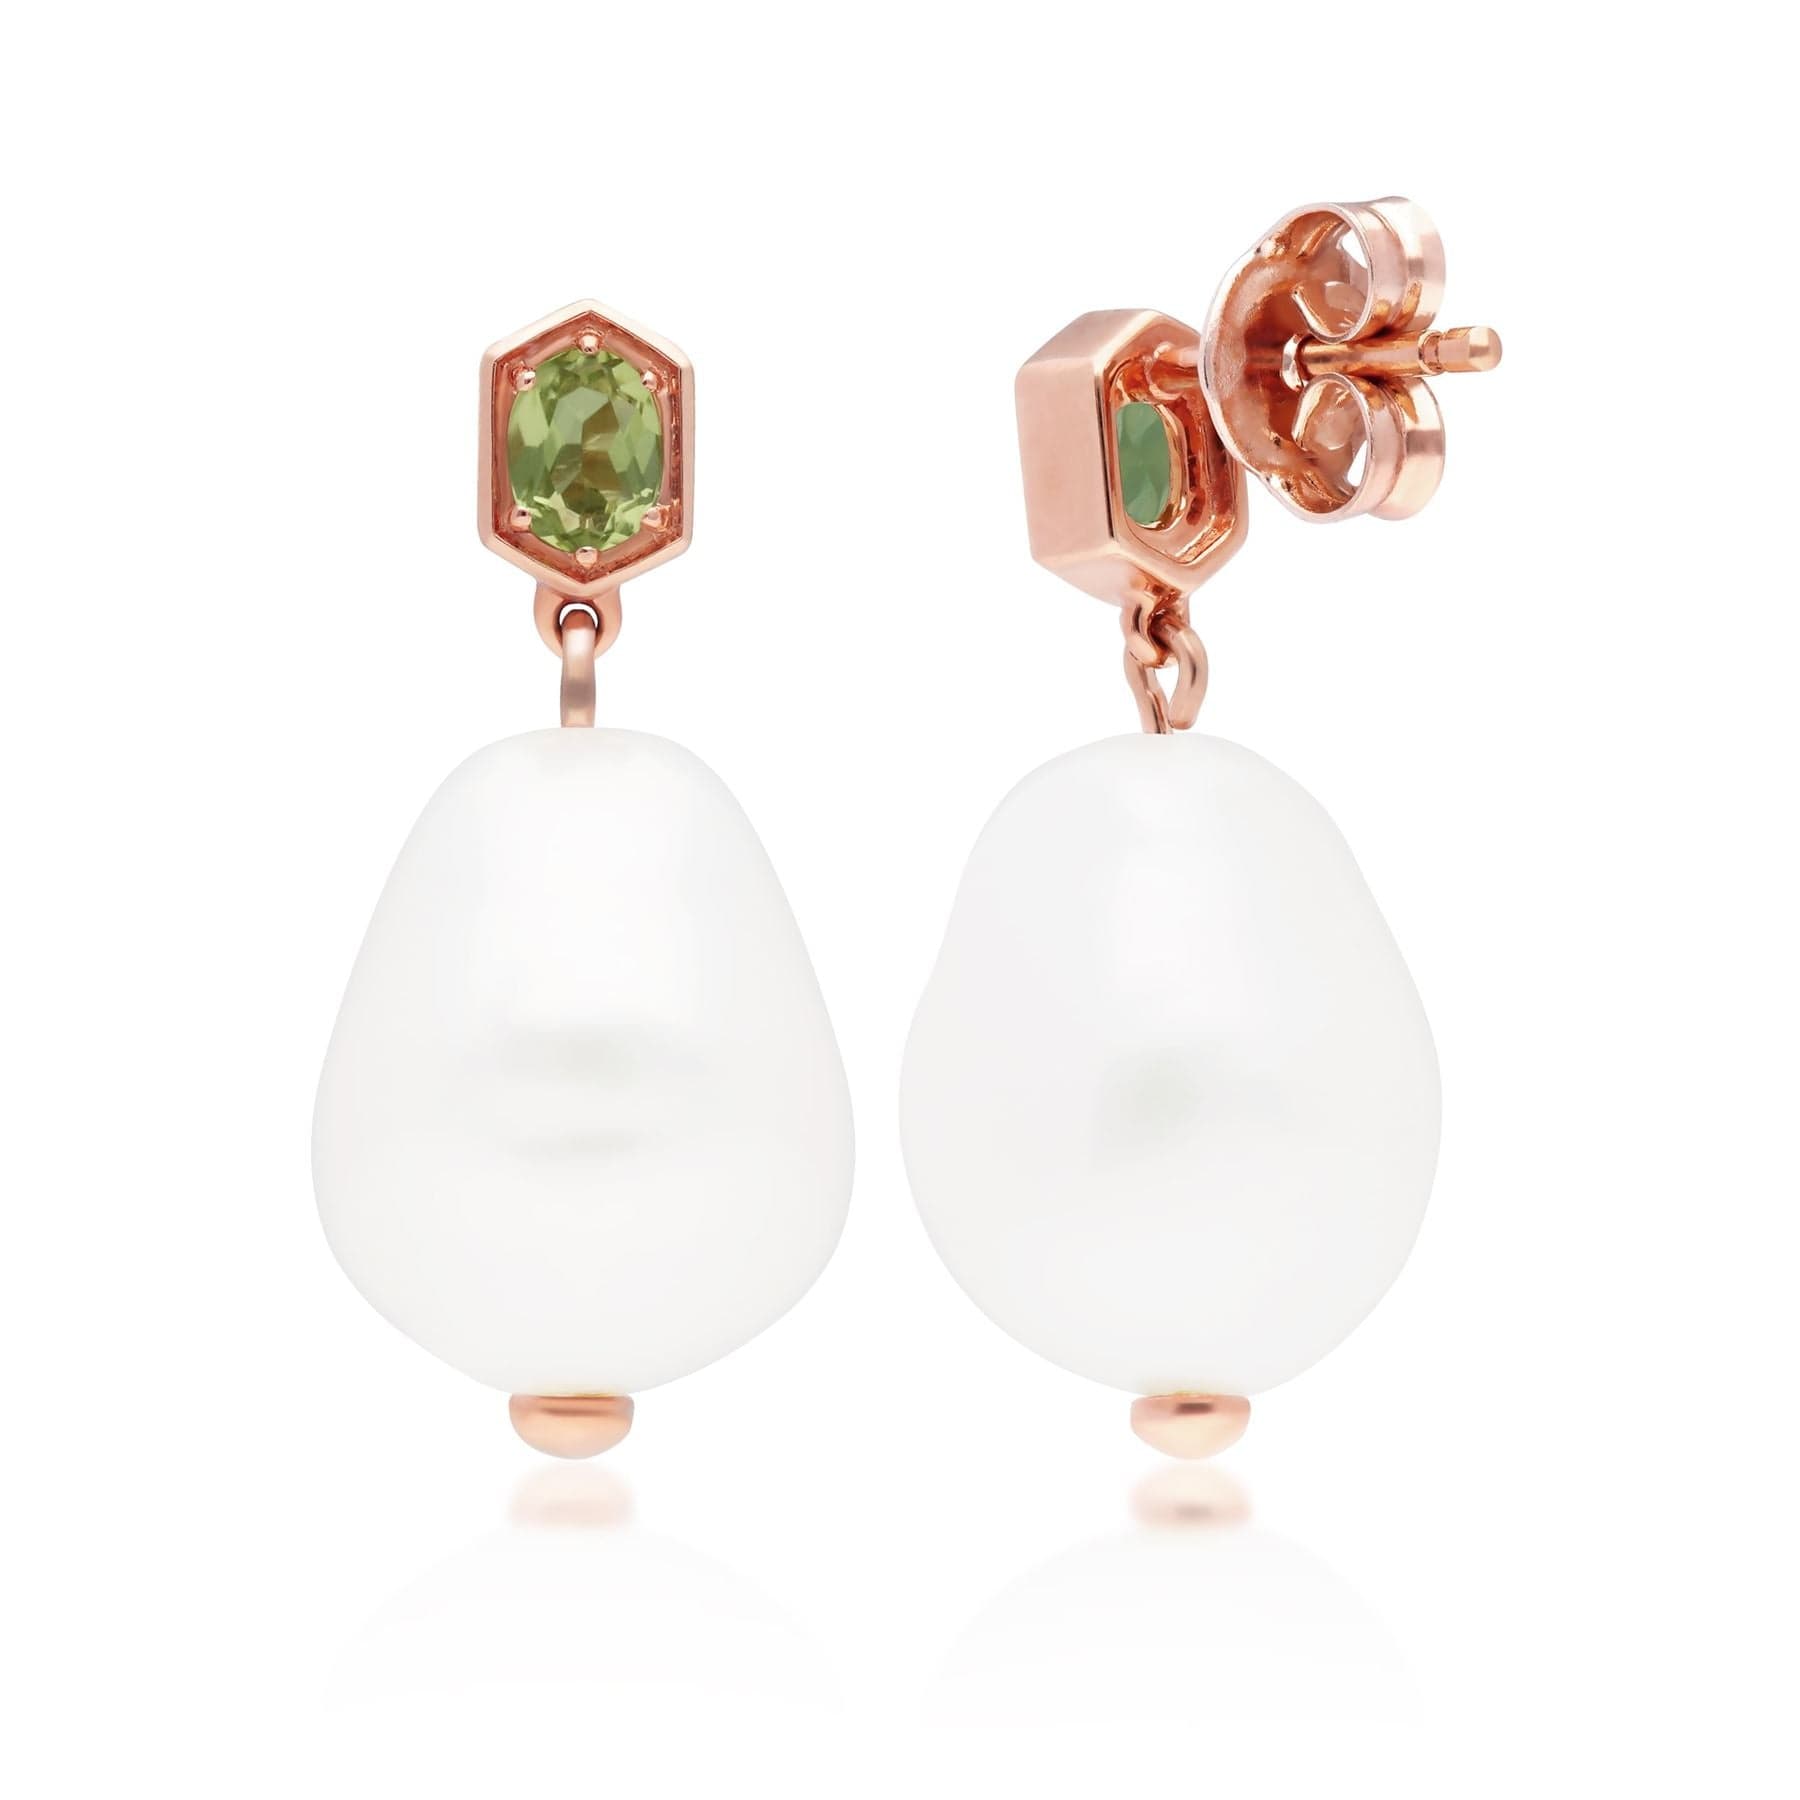 Modern Baroque Pearl & Peridot Drop Earrings in Rose Gold Plated Silver - Gemondo